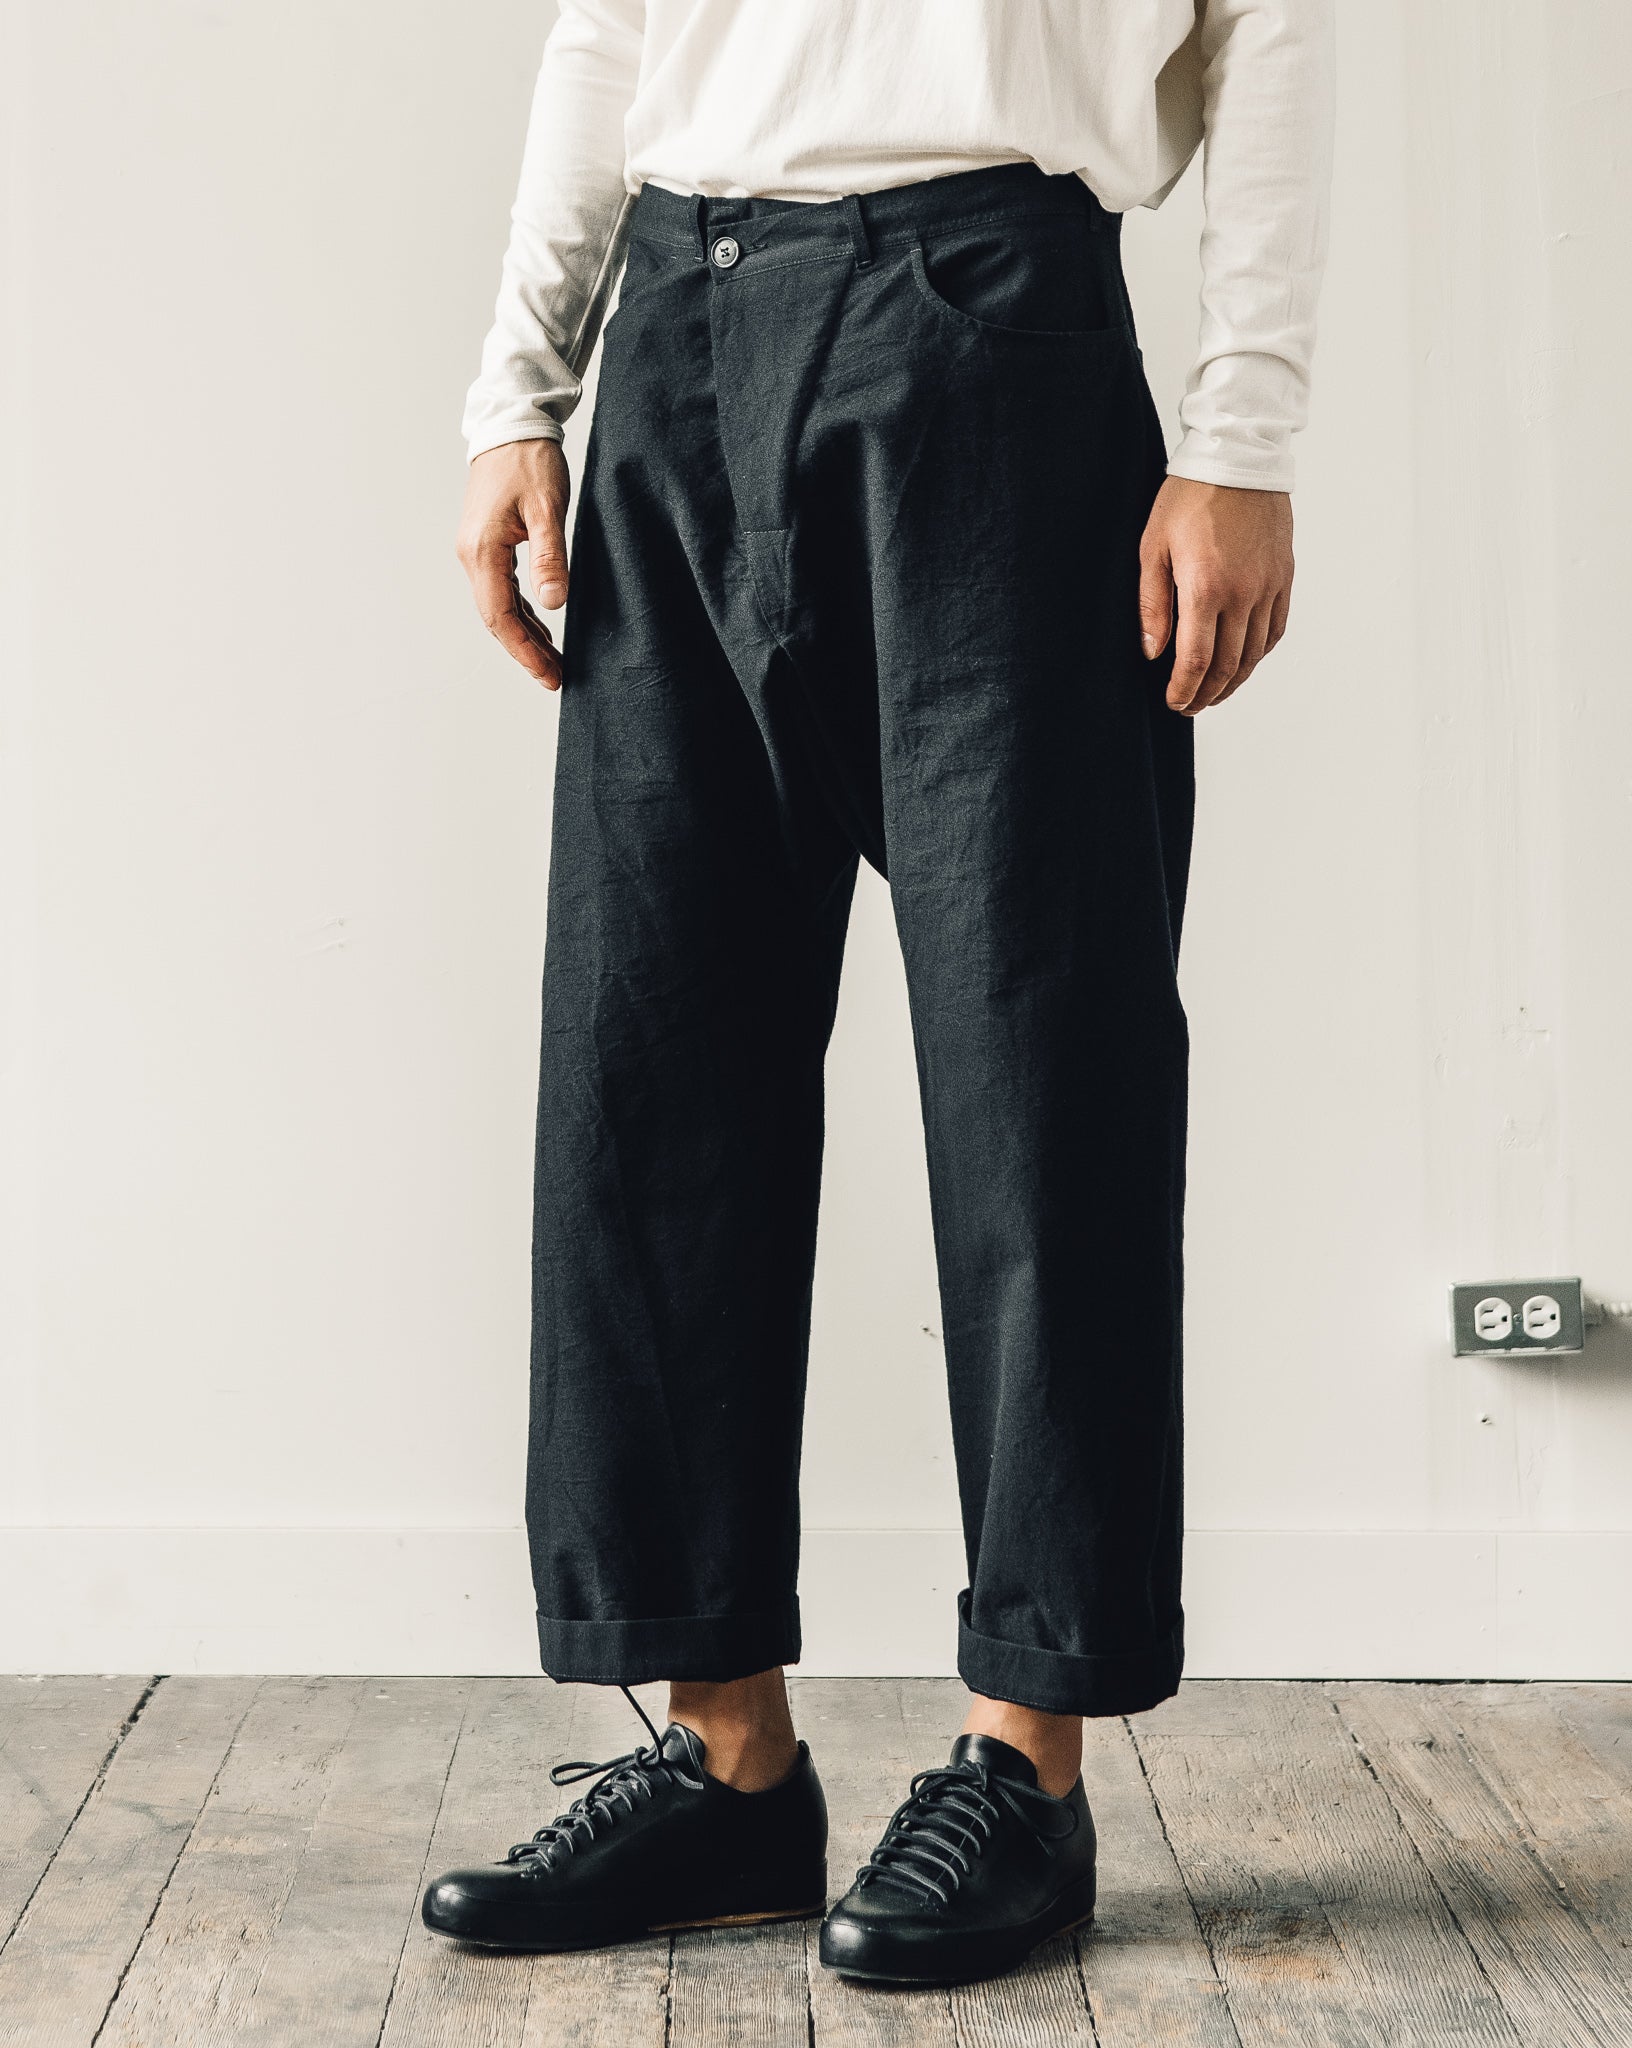 Jan-Jan Van Essche Trousers #53, Black Melange Cotton/Wool Canvas